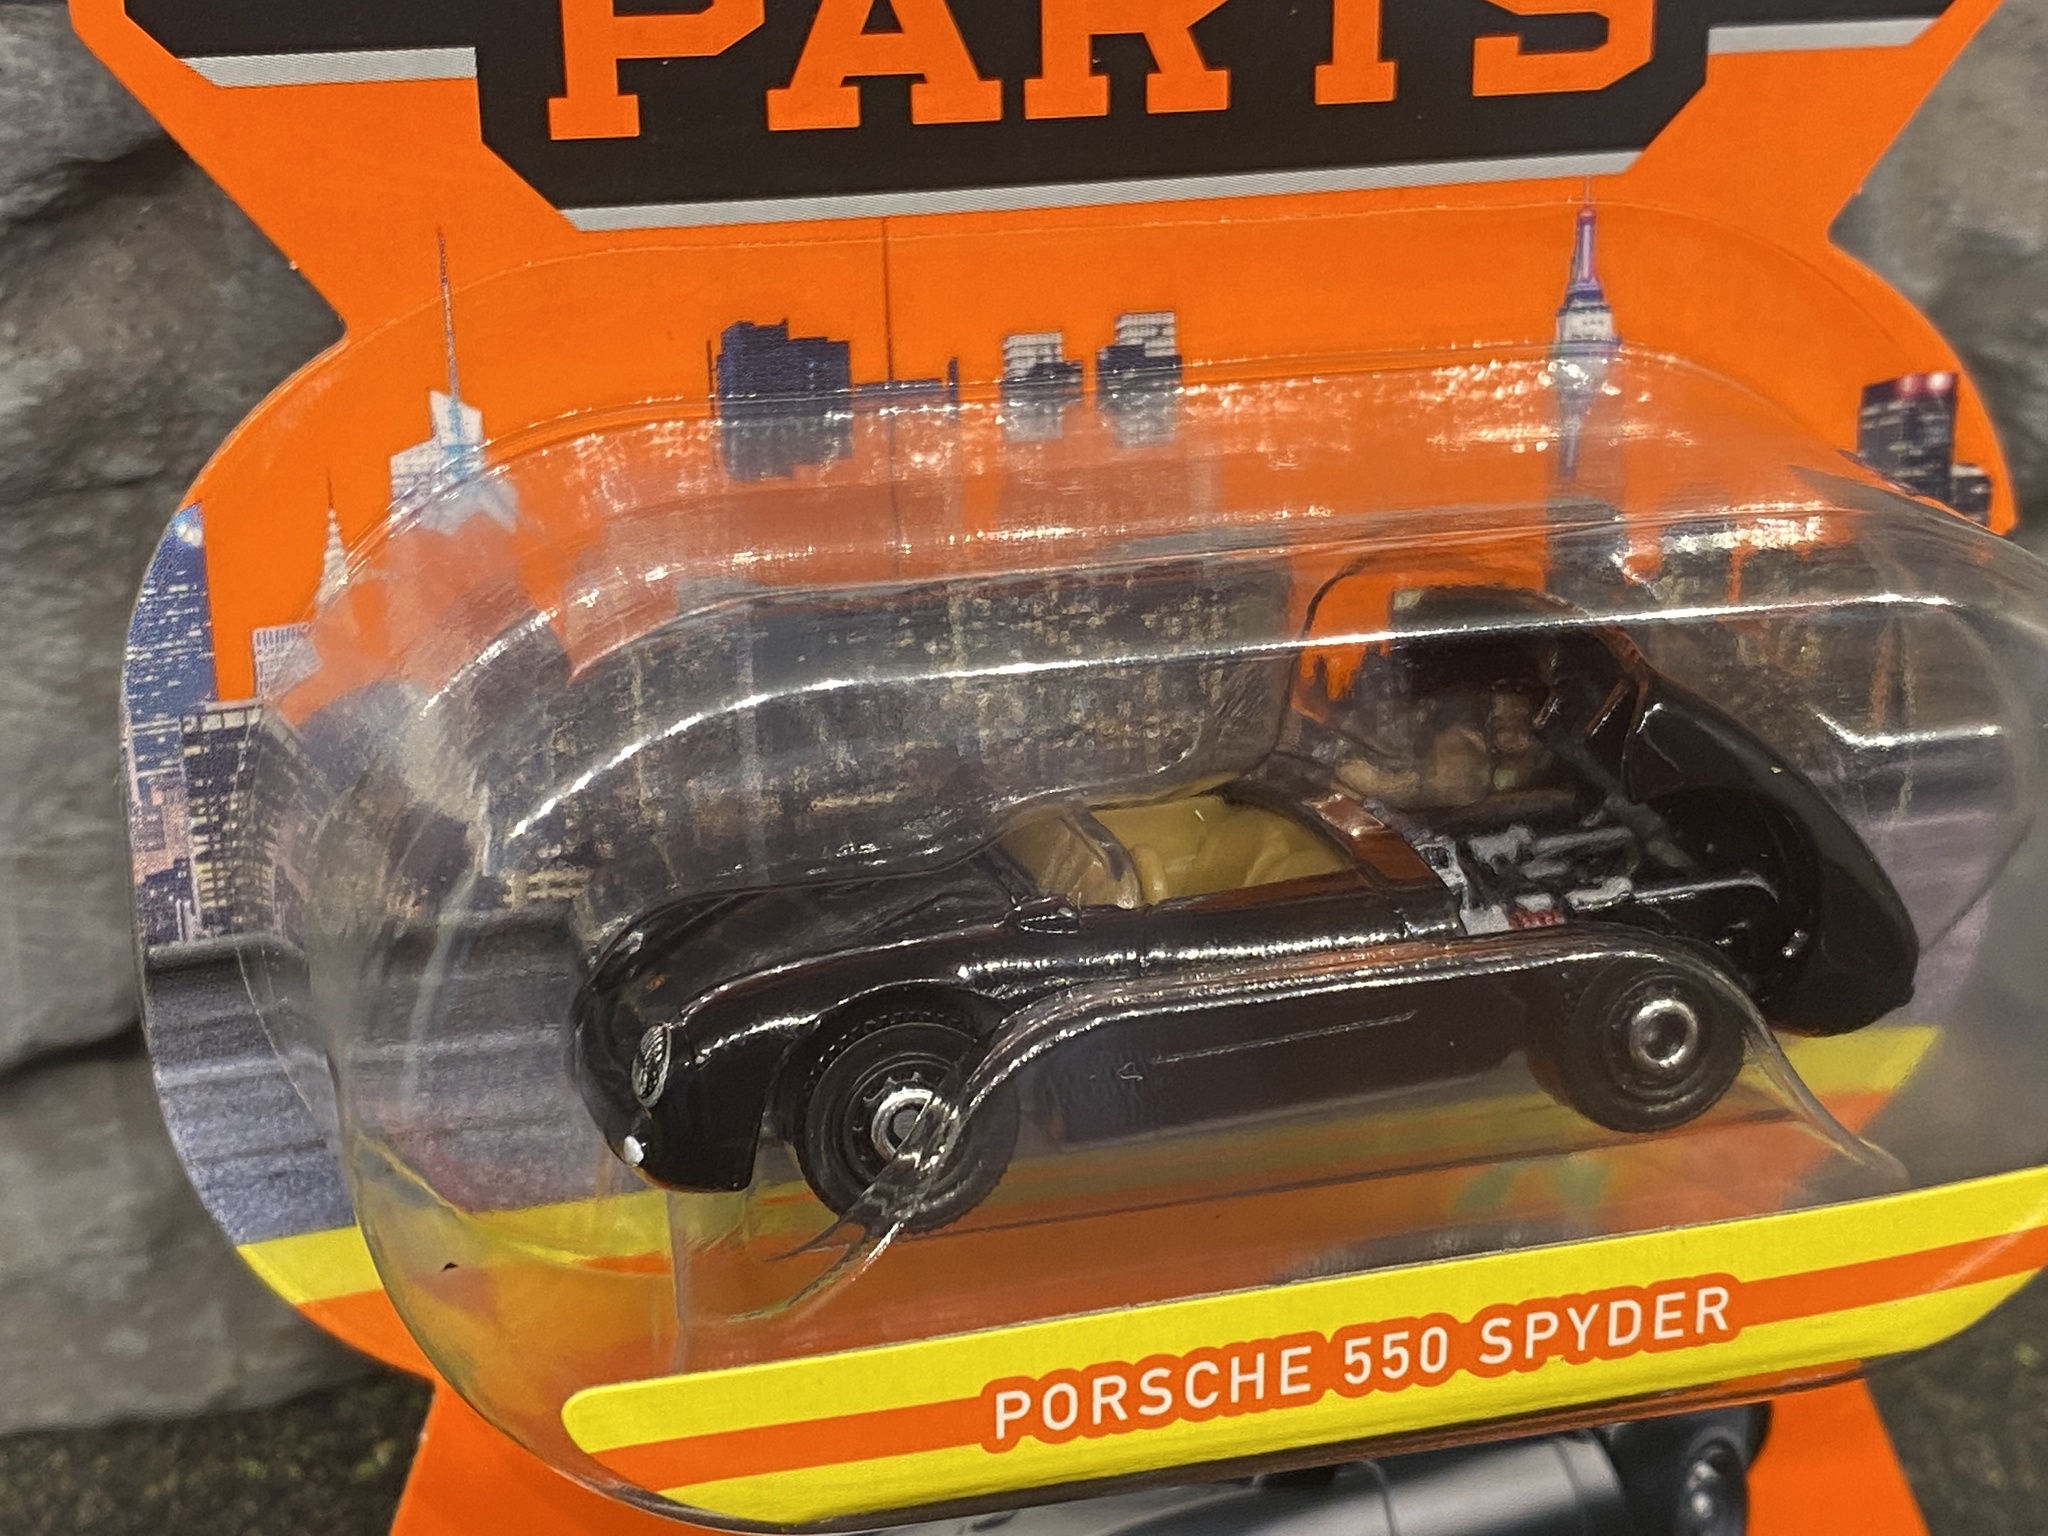 Skala 1/64 Matchbox "Moving parts" - Porsche 550 Spyder